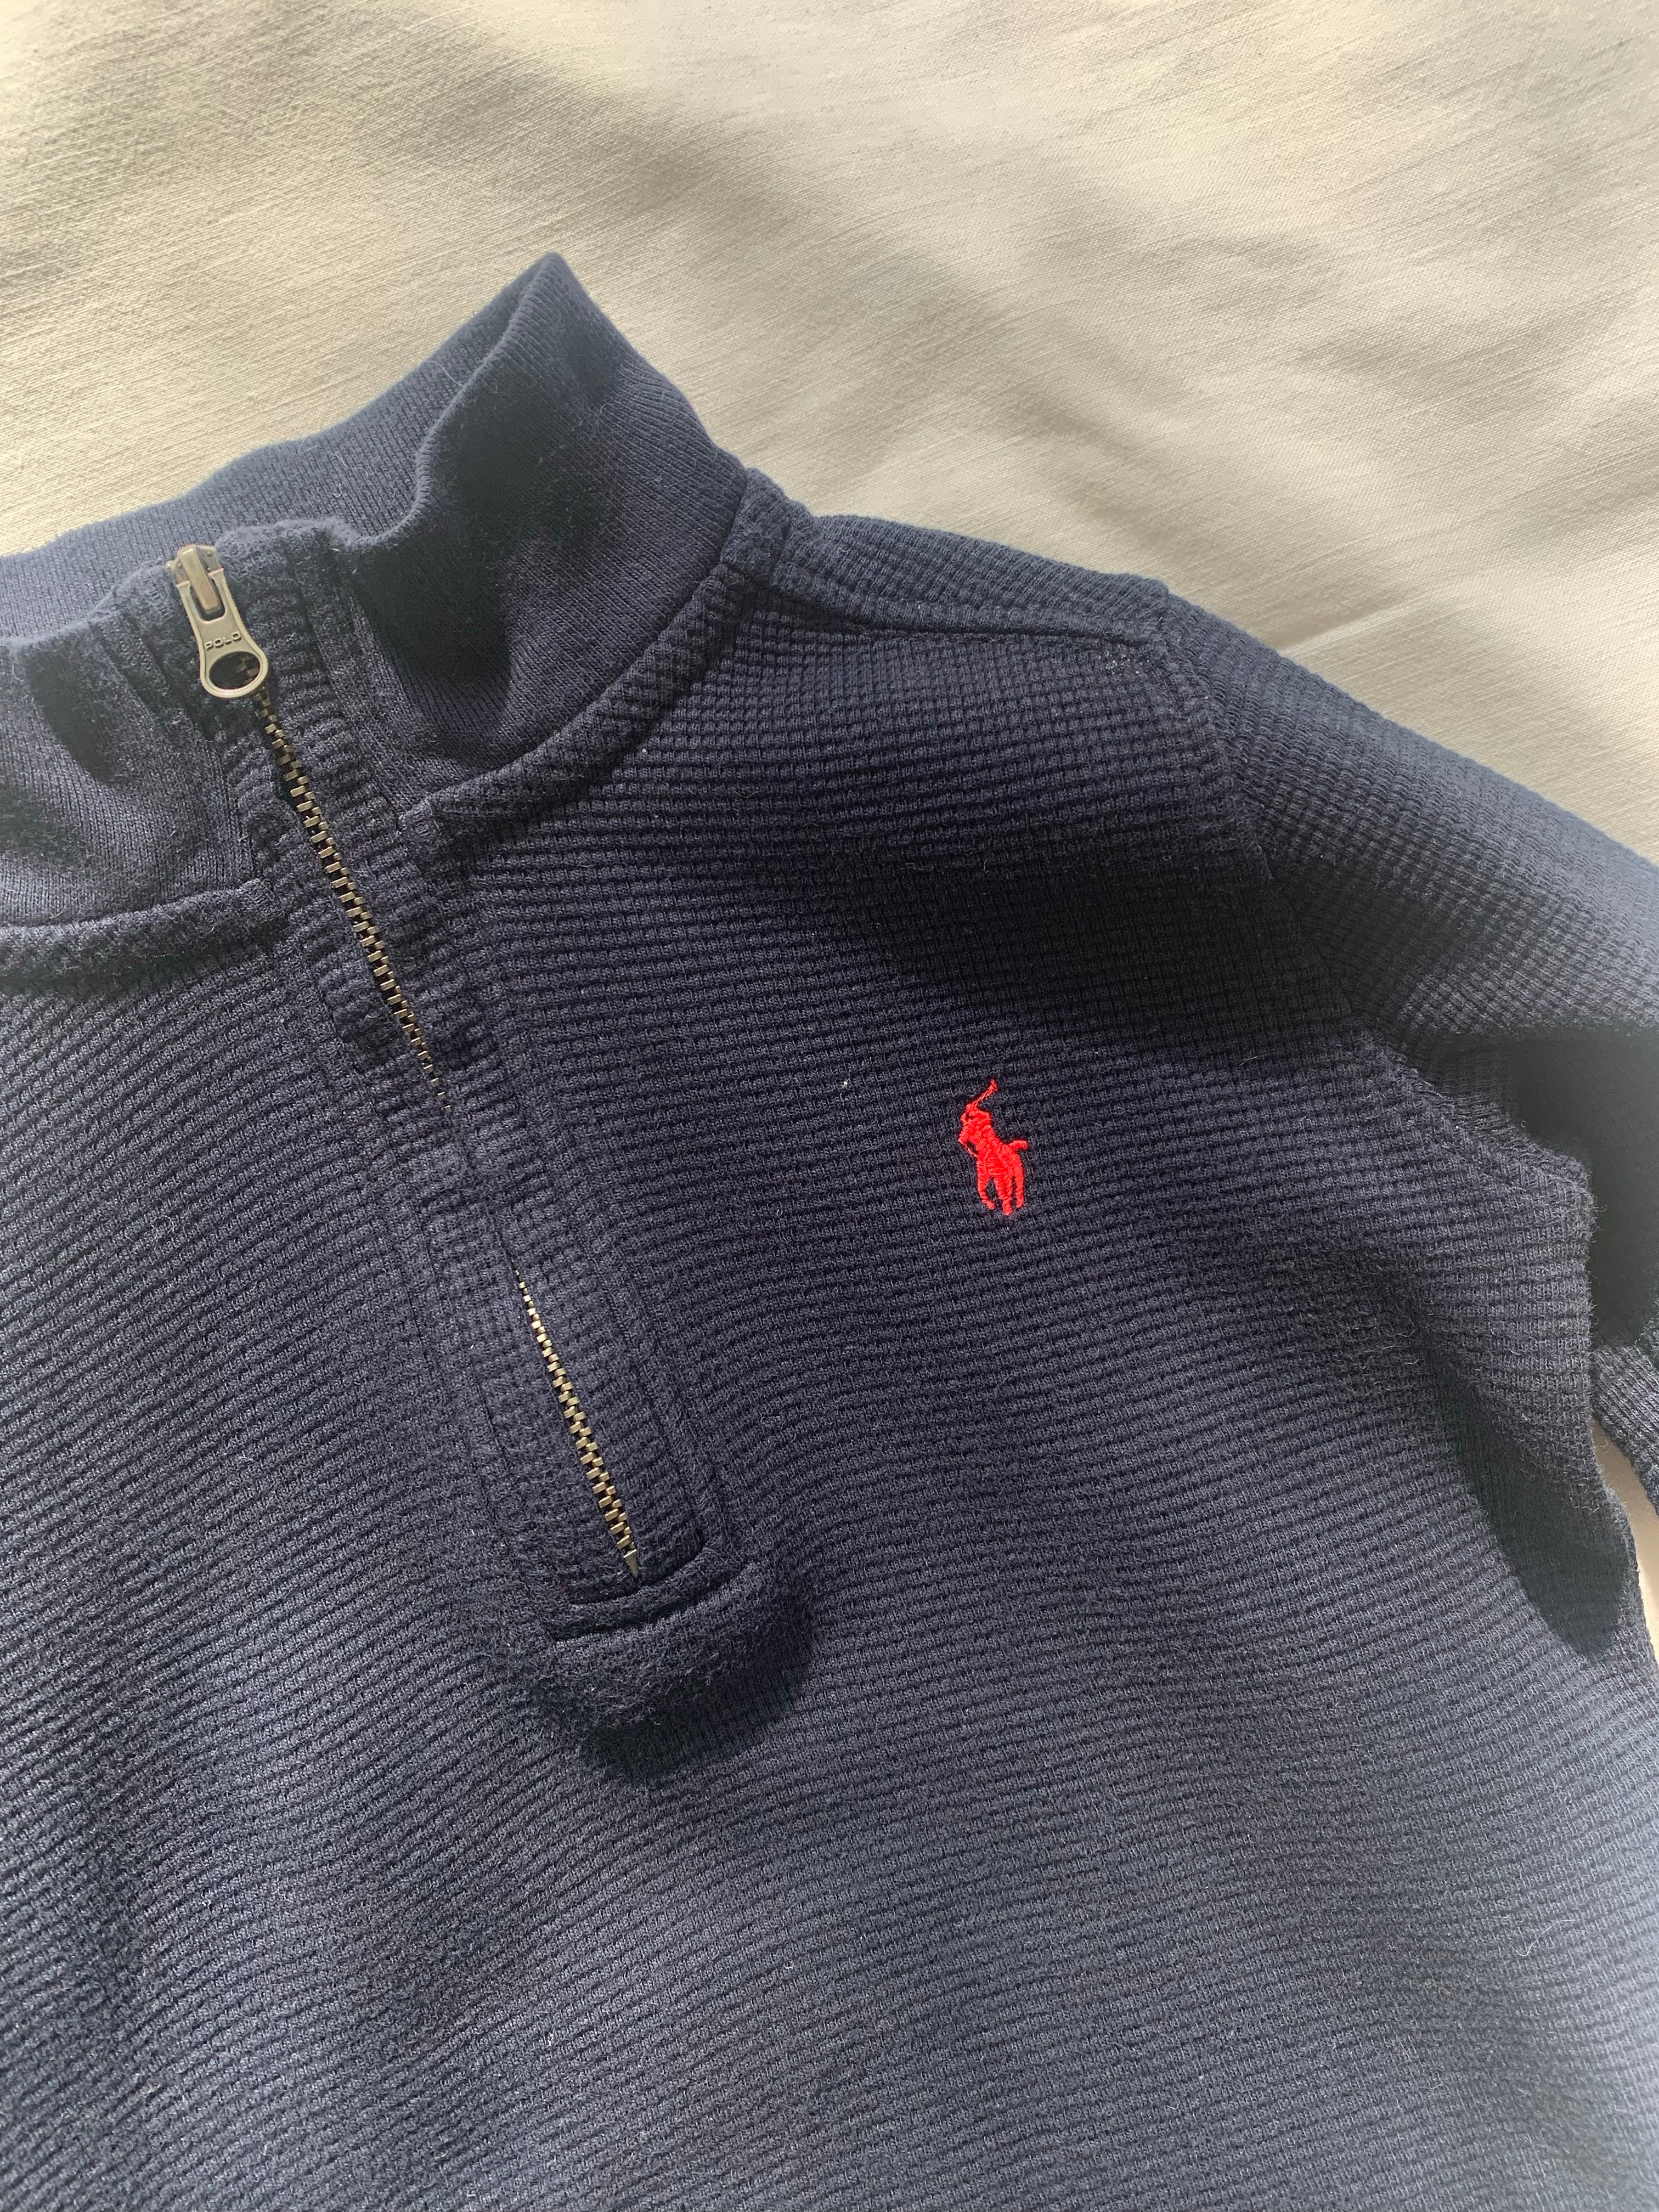 Mörkblå tröja, Polo Ralph Lauren, stl 4Y